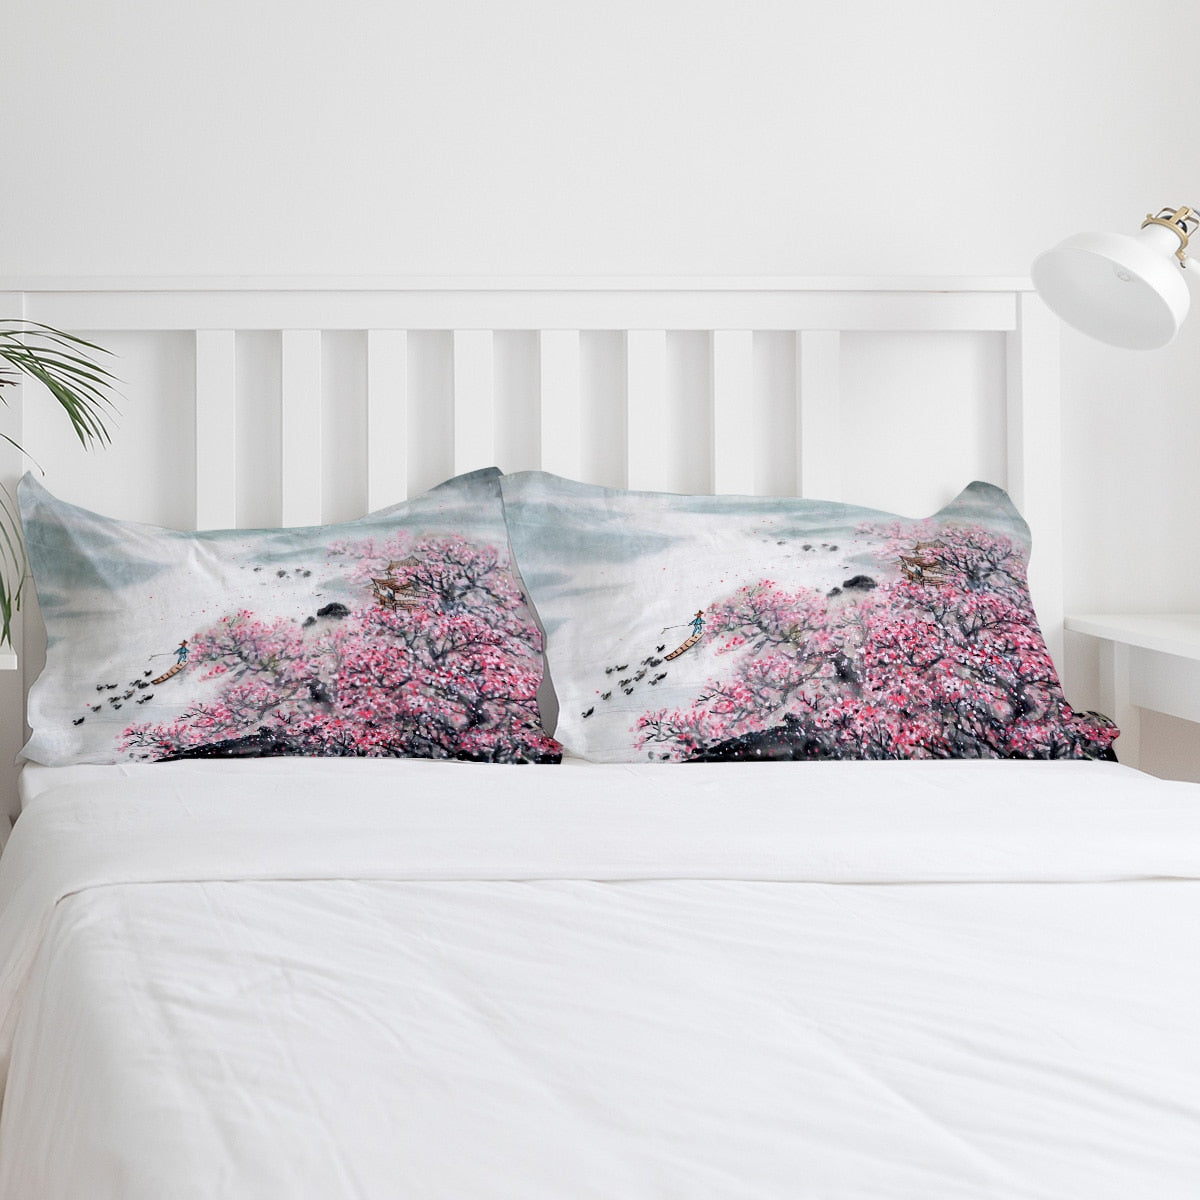 4 Pcs Duvet Cover Plum Blossom Ink Painting Design Bedding Set Home Bedding Set Luxury Comforter Bedding Sets